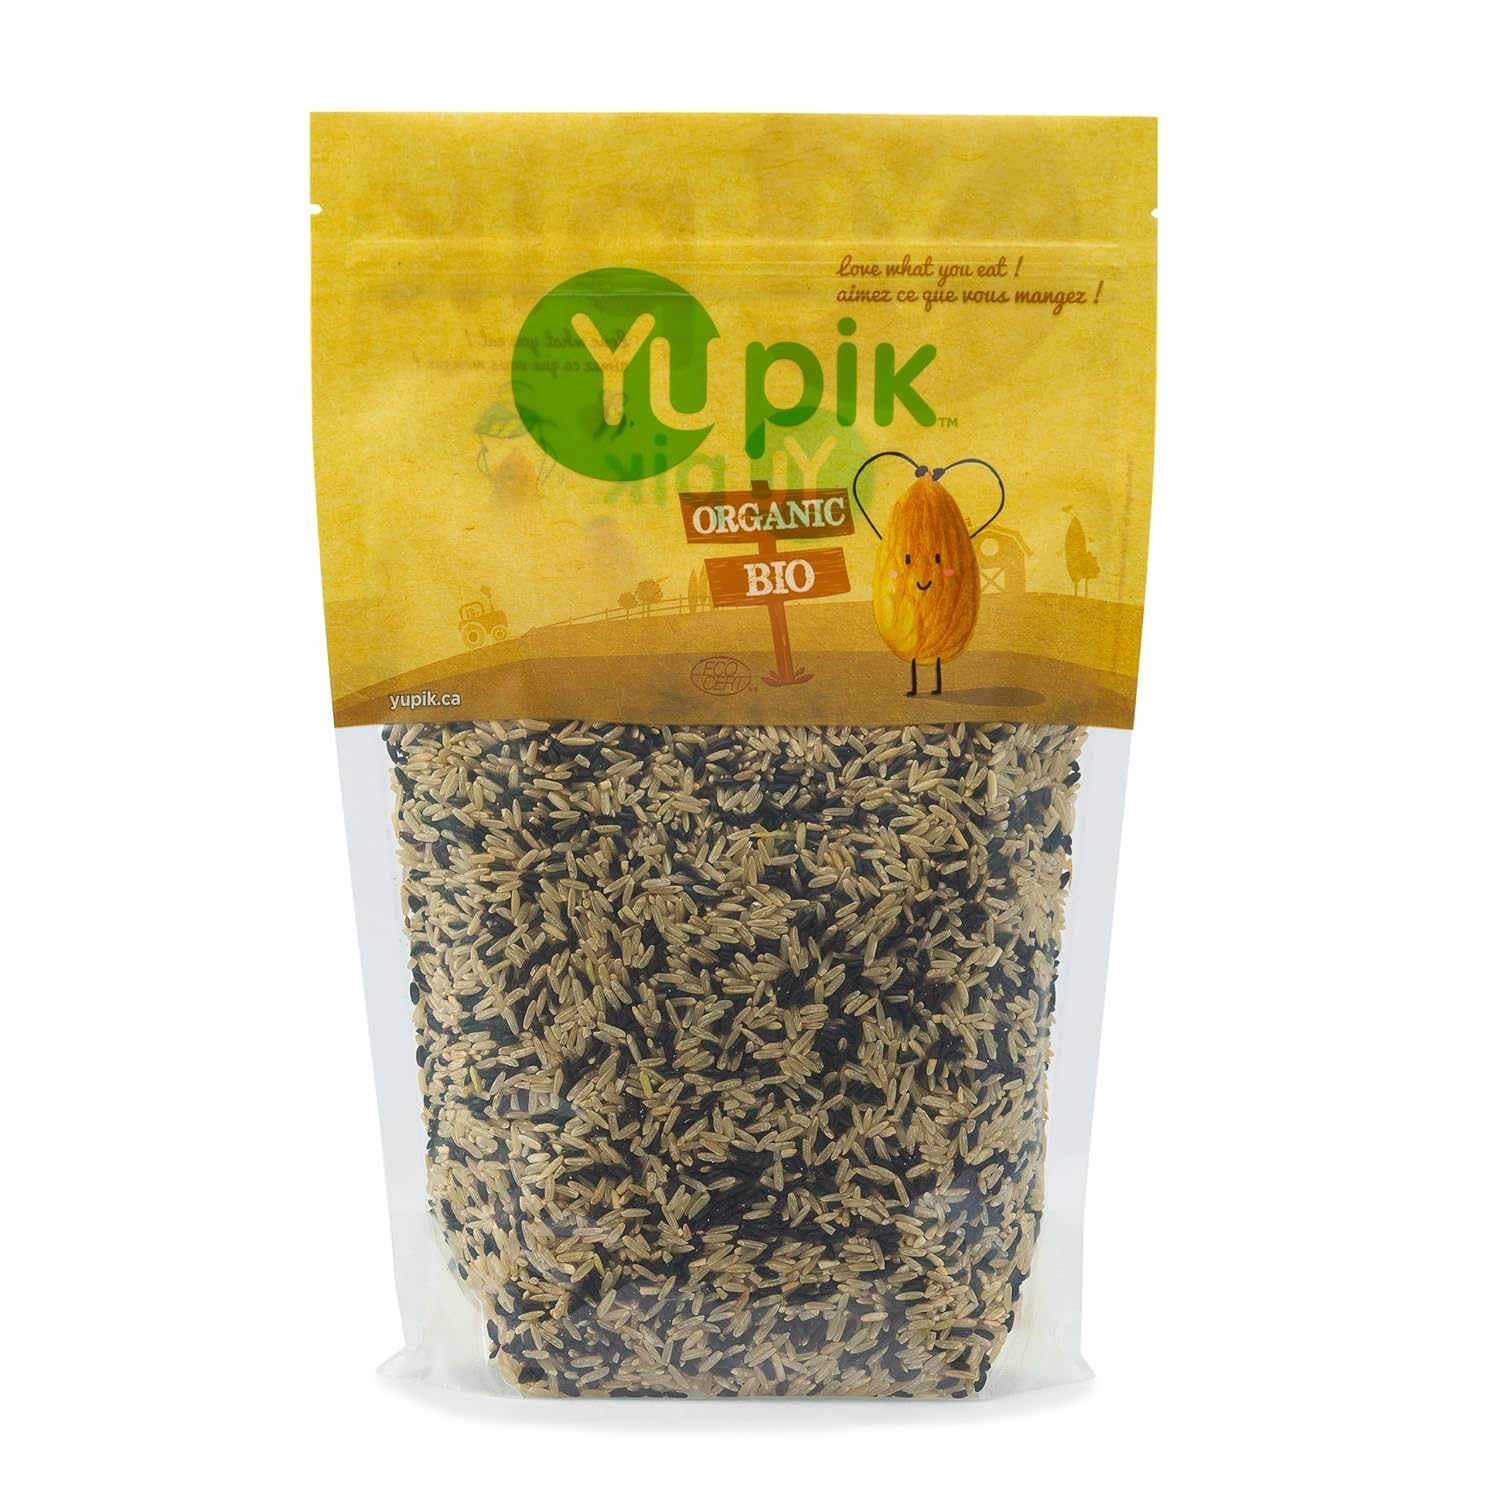 Yupik Organic Ancient Black Rice Blend, 2.2 lb, Non-GMO, Vegan, Pack of 1